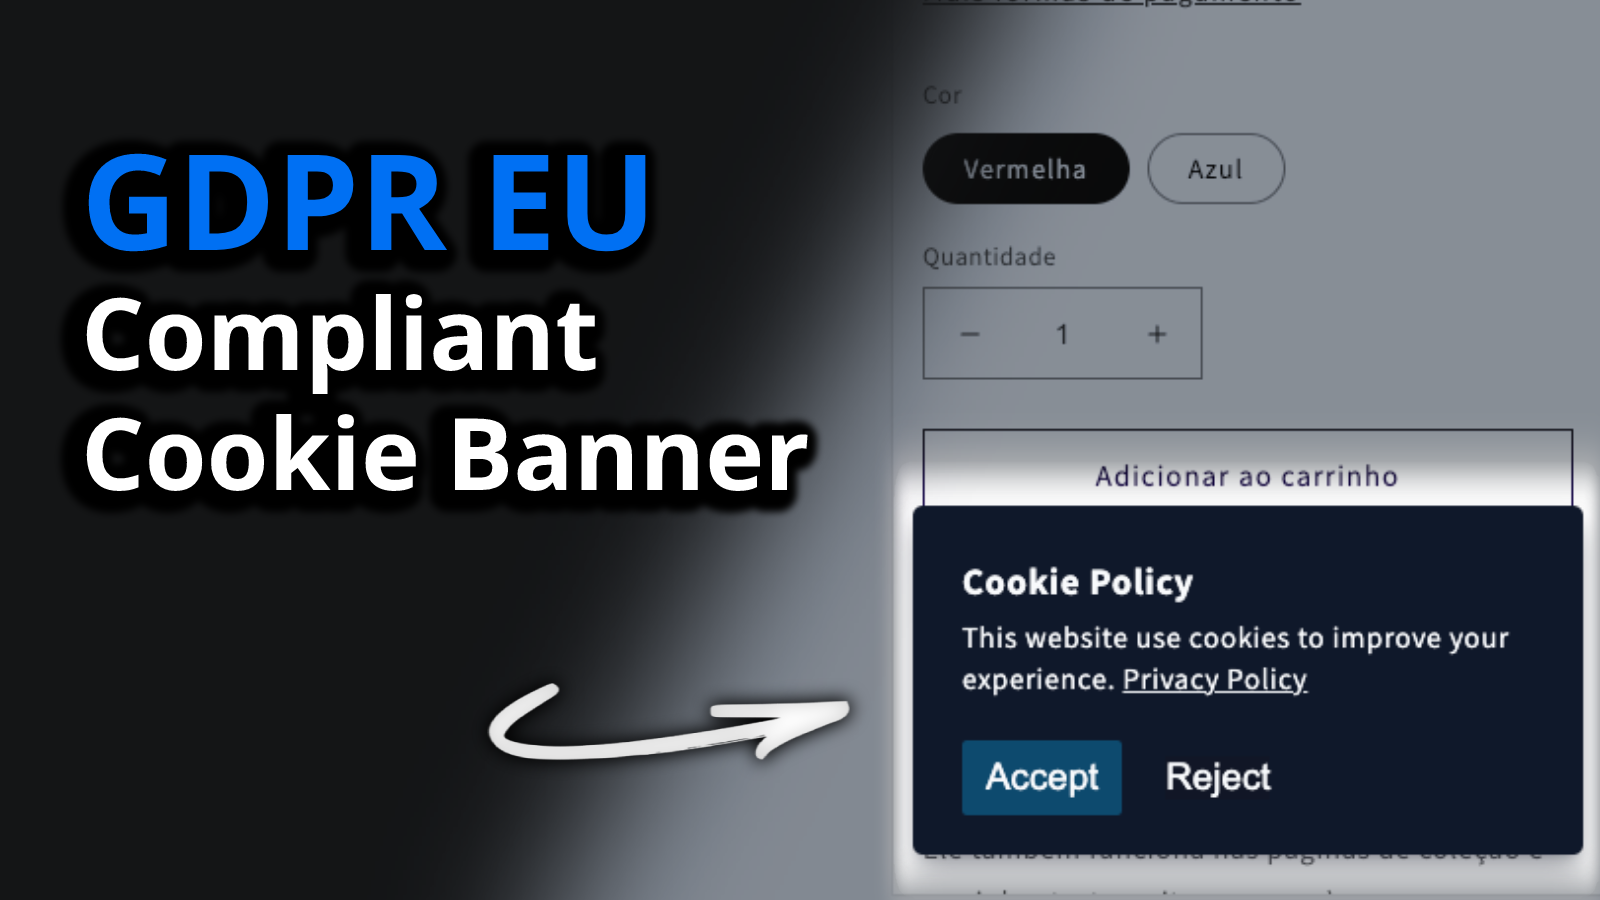 GDPR EU Compliant Cookie Banner